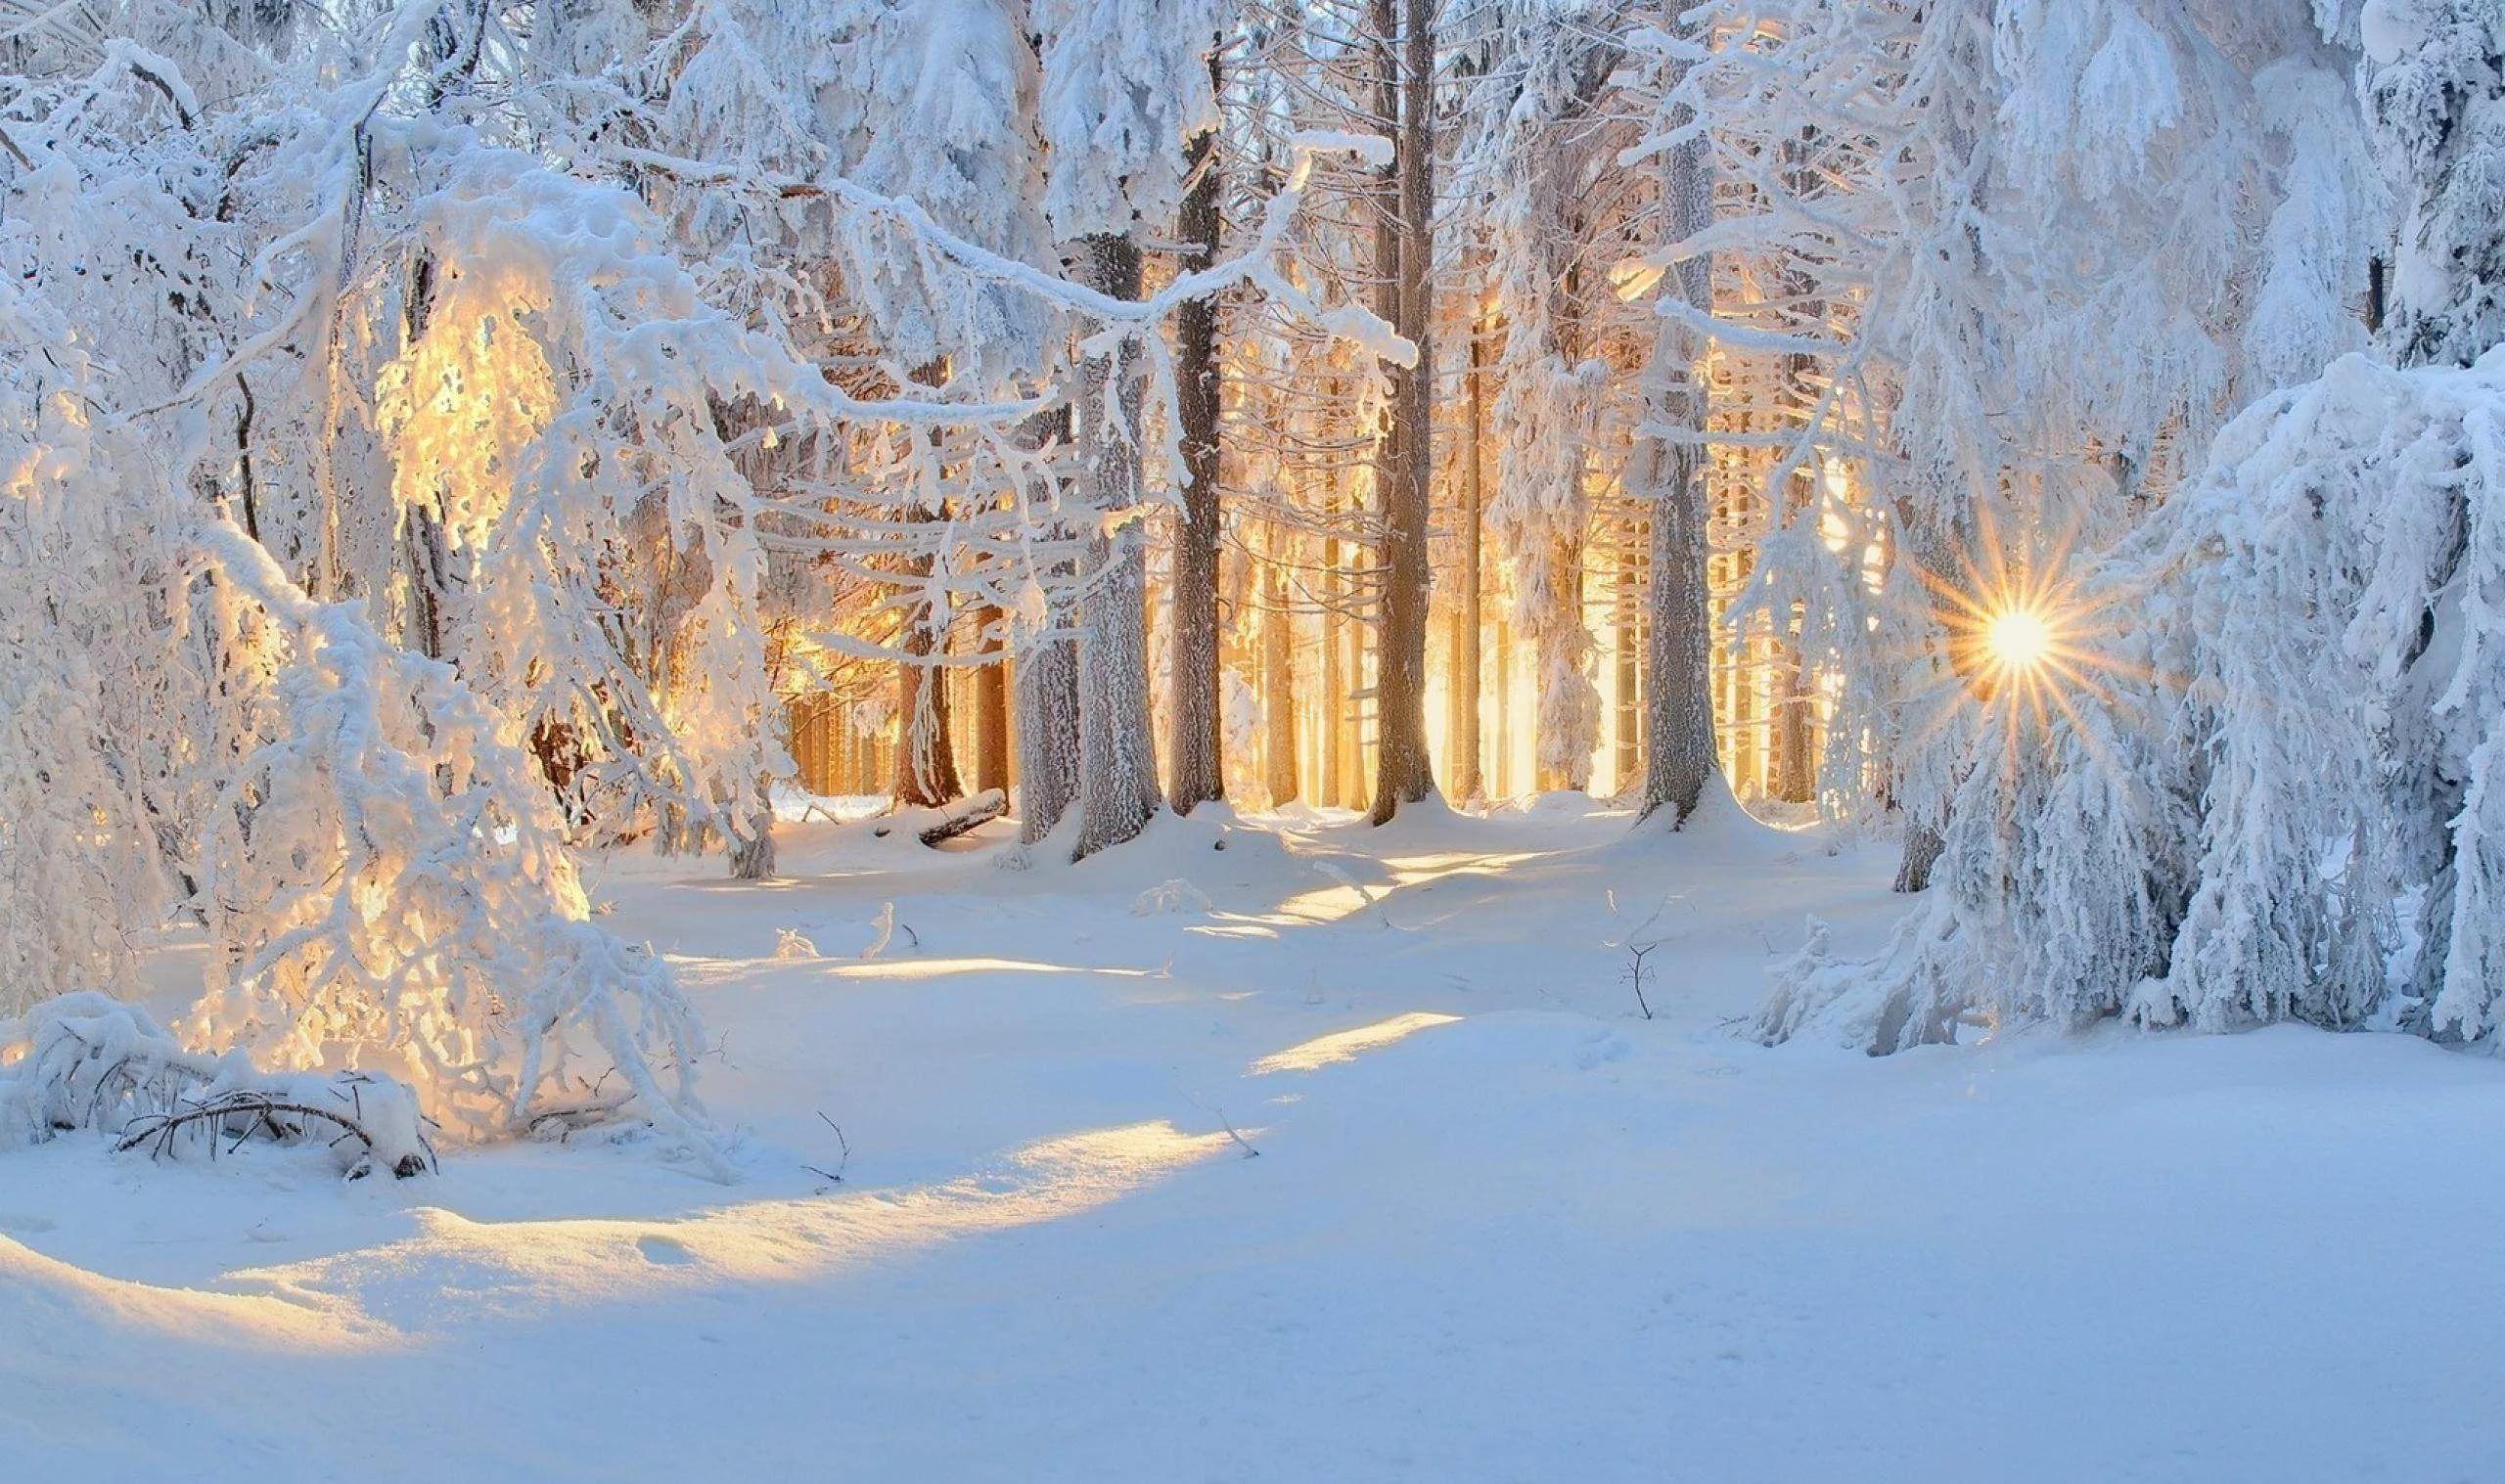 заставка на экран компьютера зима: 13 тыс изображений найдено в  Яндекс.Картинках | Winter nature, Winter scenes, Winter photography